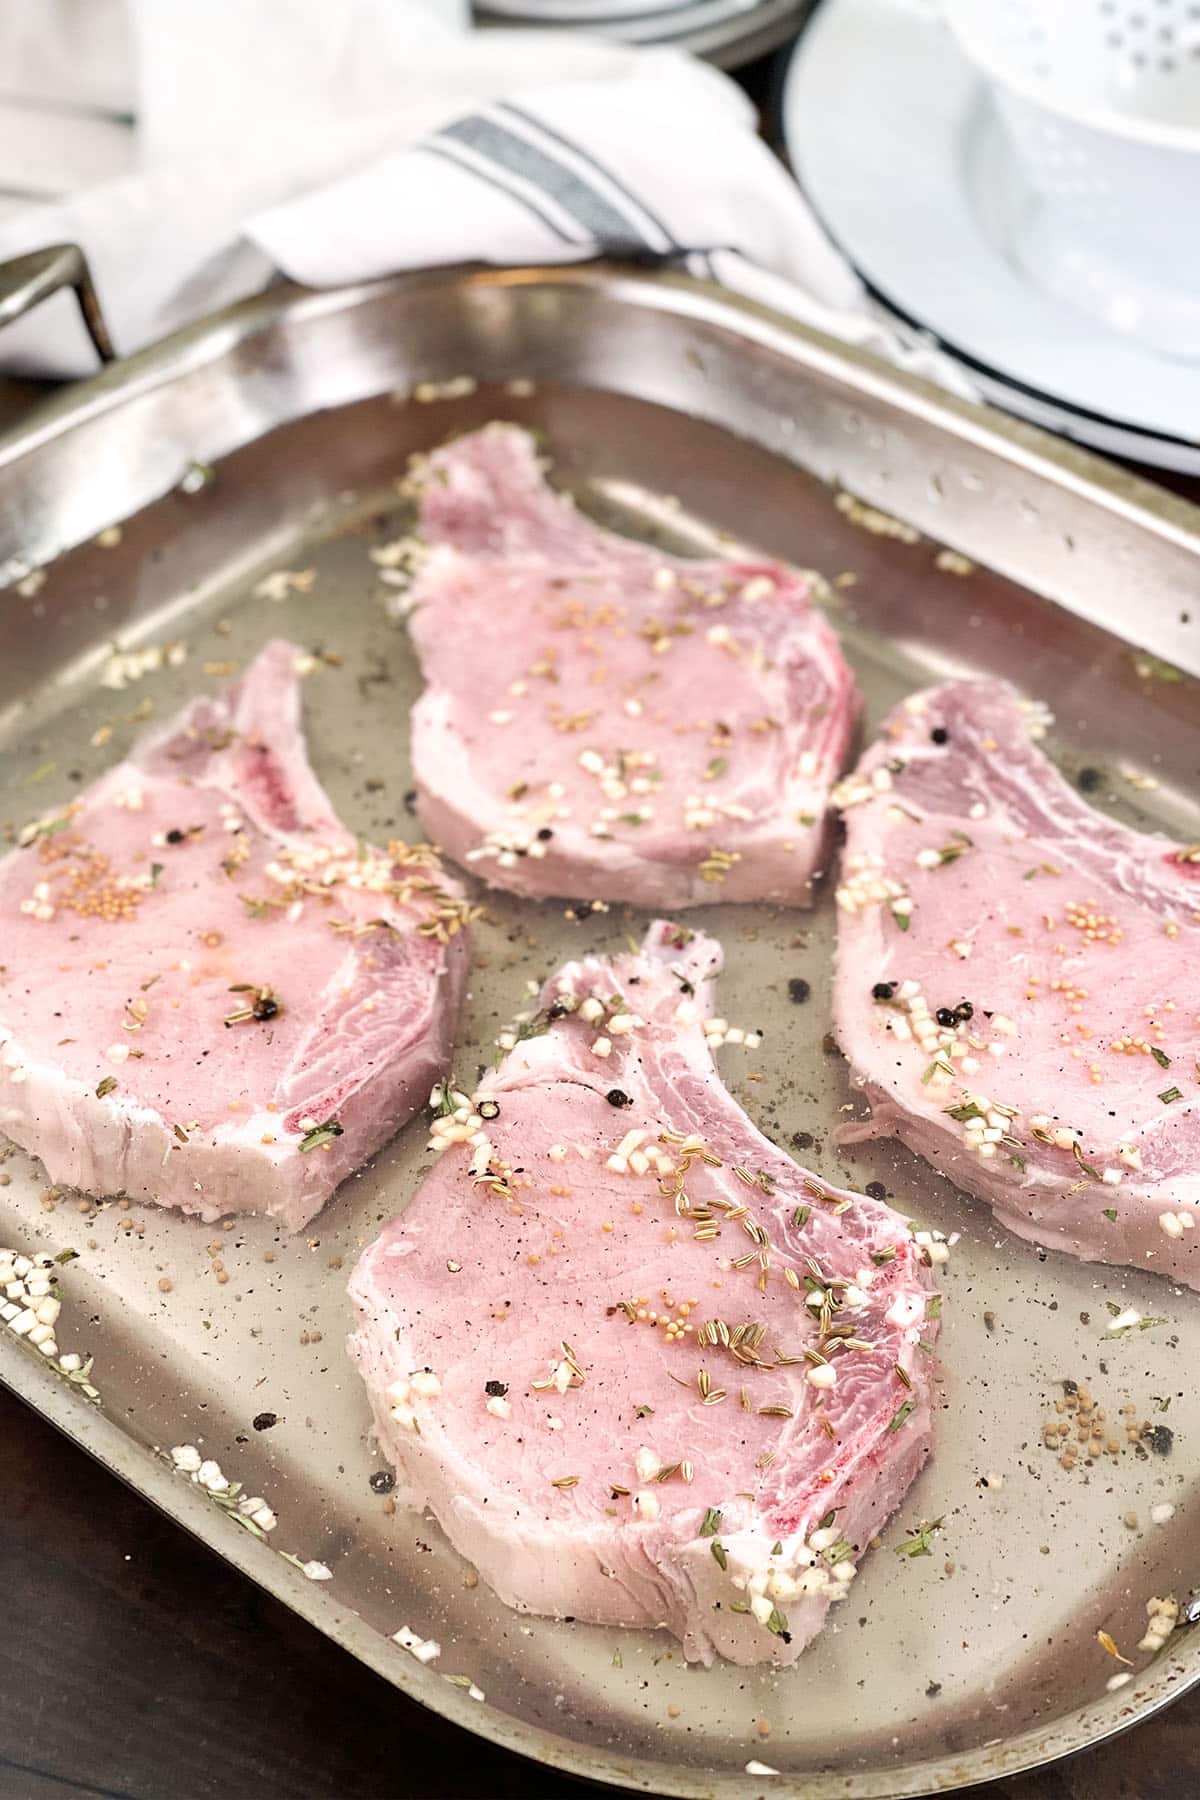 How to Brine Pork Chops